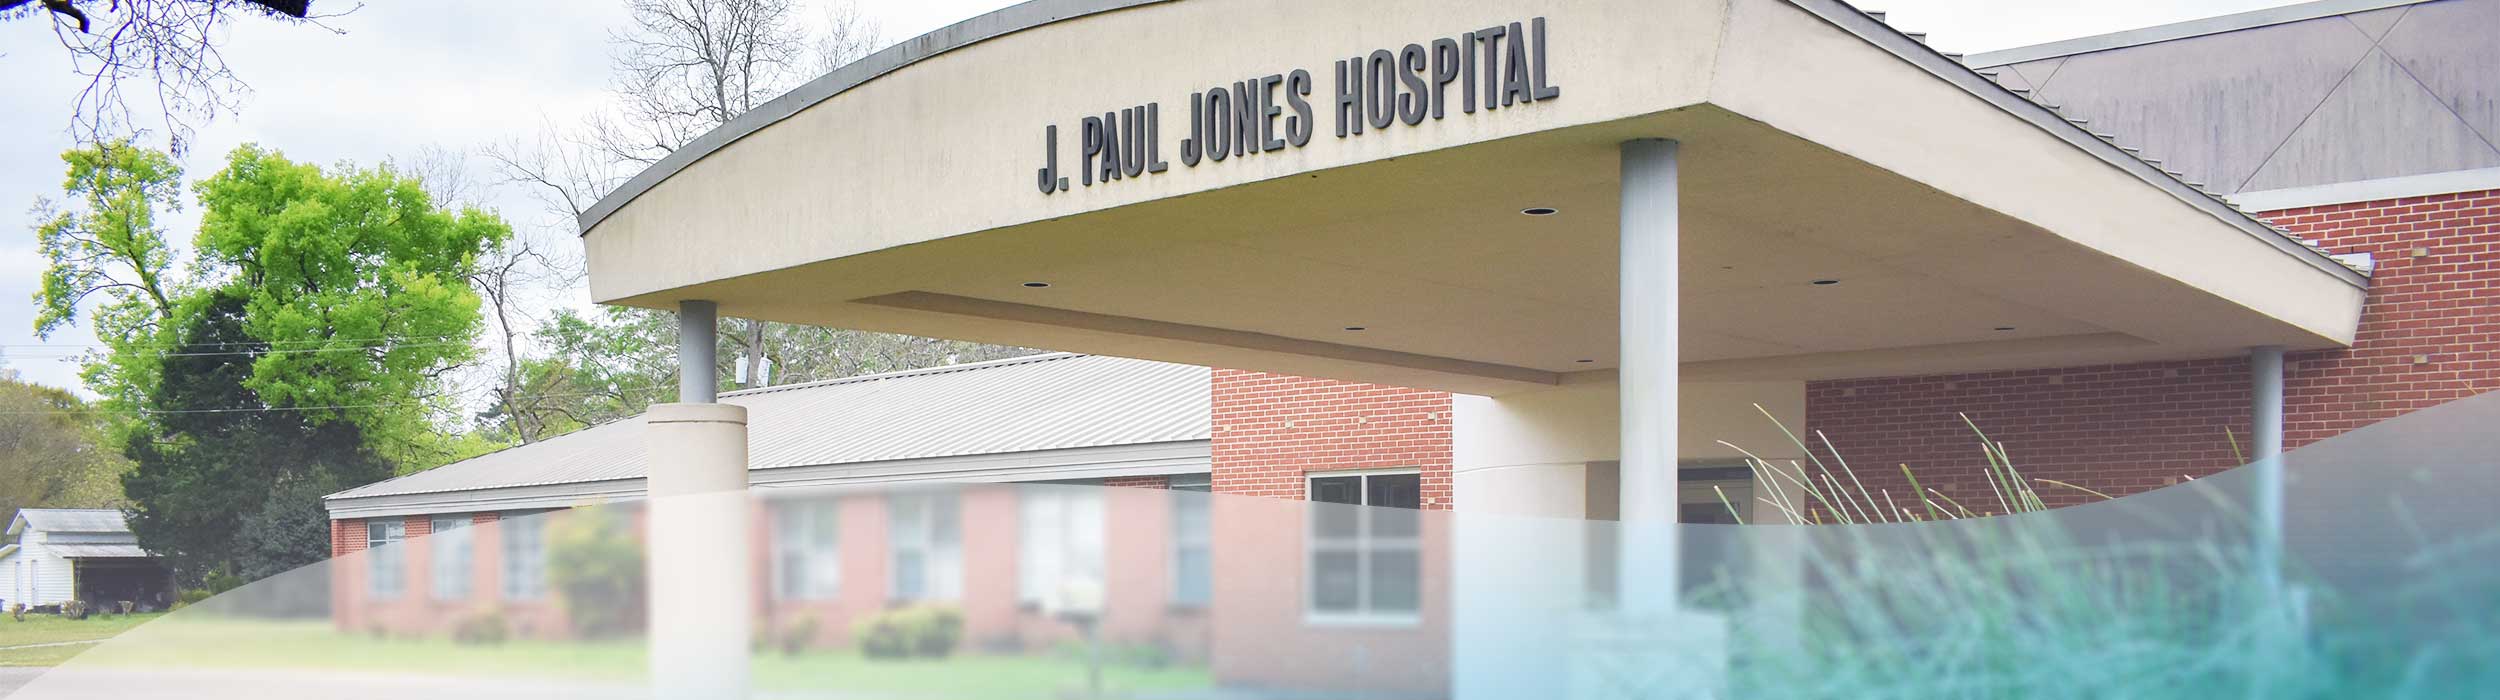 J. Paul Jones Homepage Sliding Image of Front of Hospital